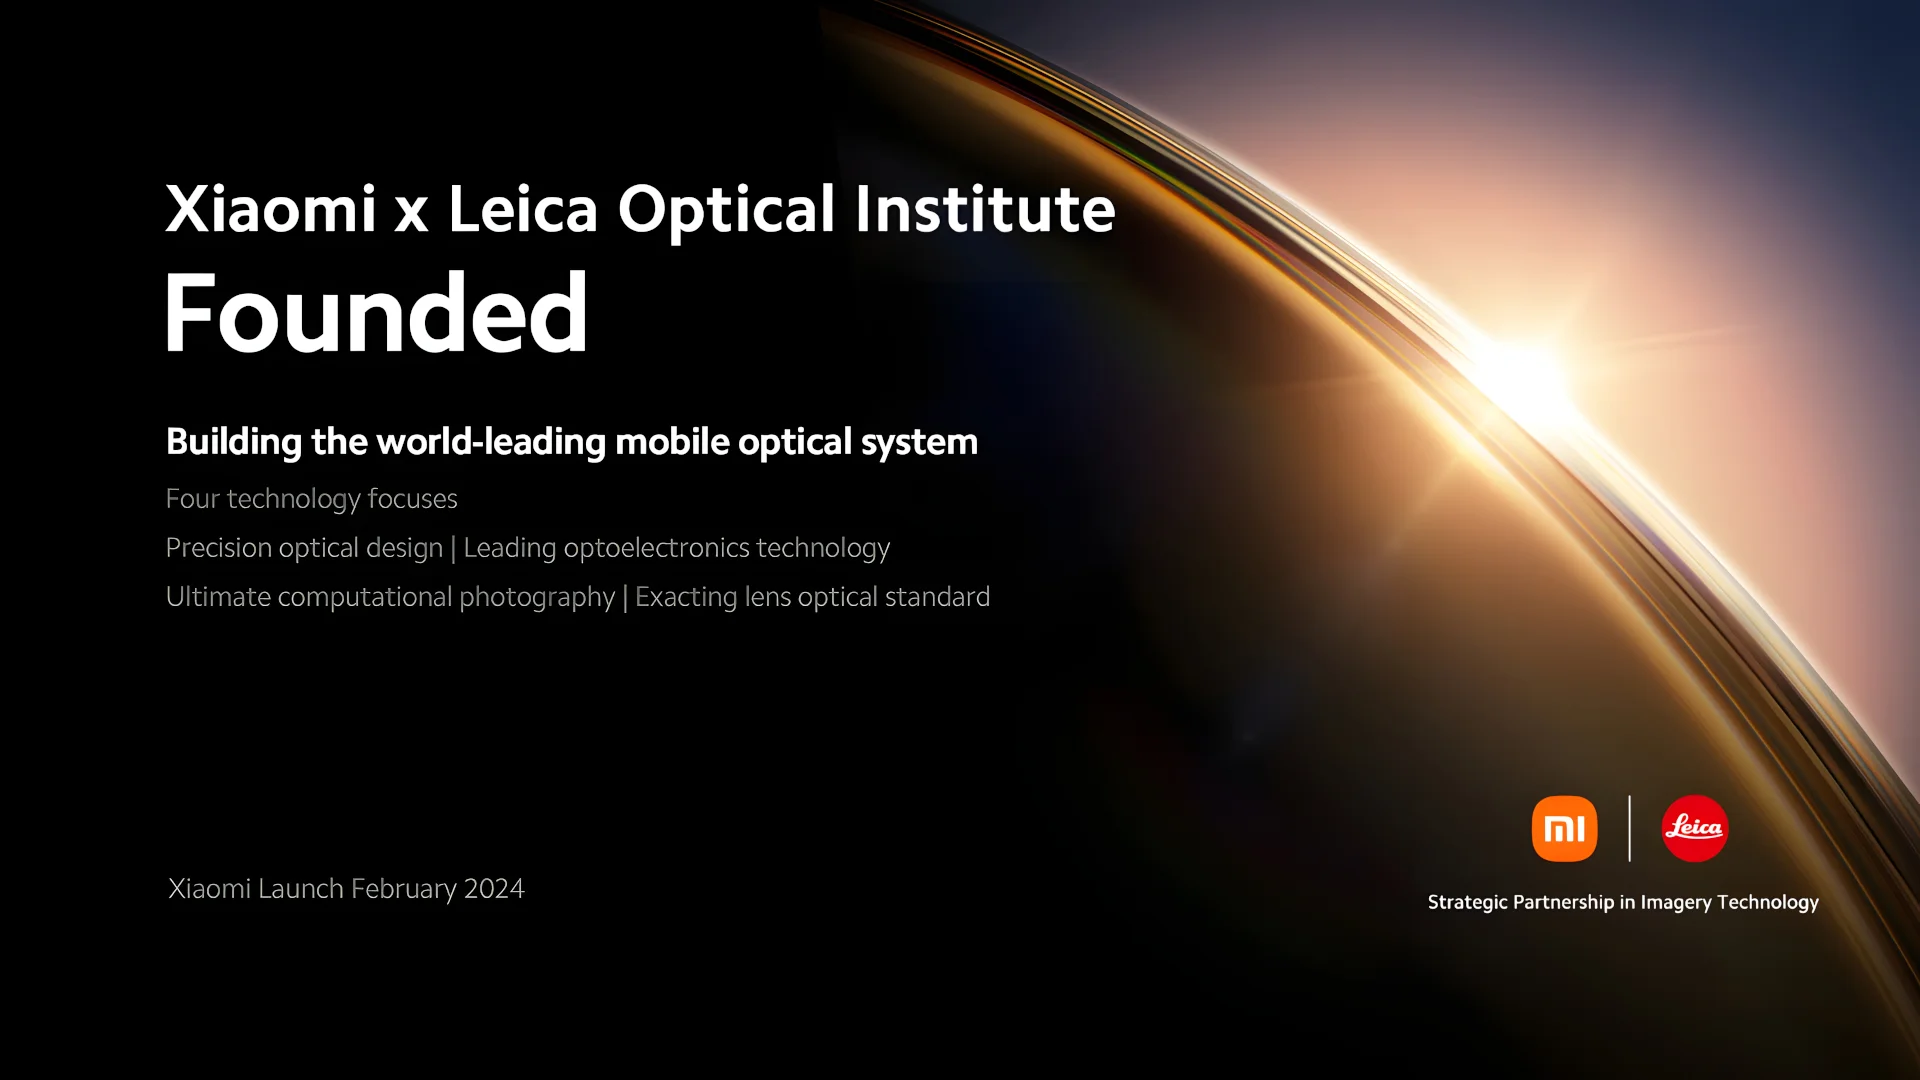 Hrdina optického institutu Xiaomi x Leica